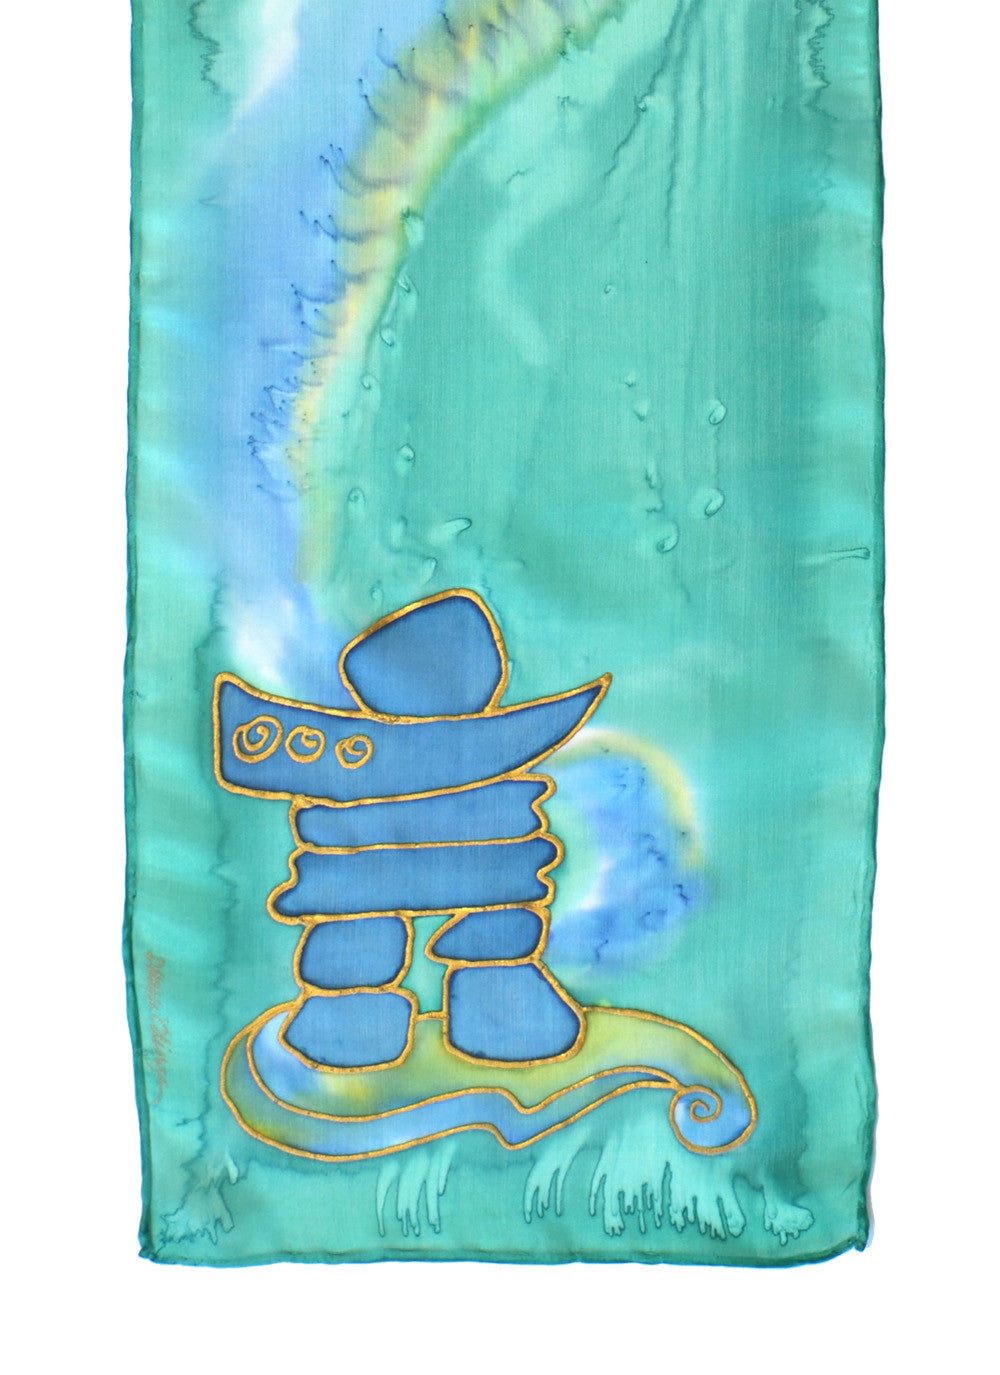 Silk scarf with inuksuk design shown in mint green